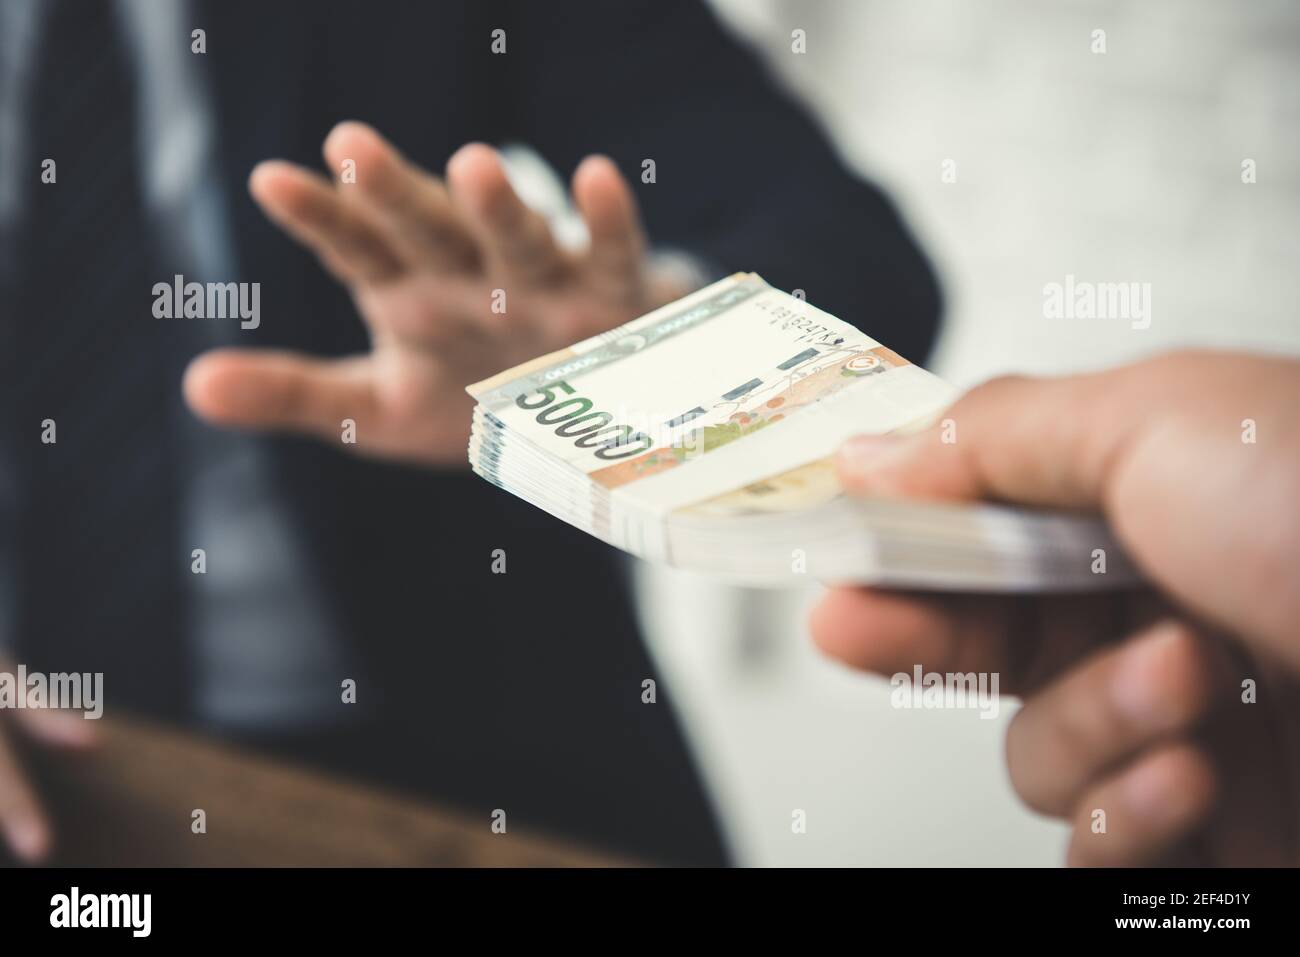 Businessman refusing money, South Korean won bills - anti bribery and corruption concepts Stock Photo